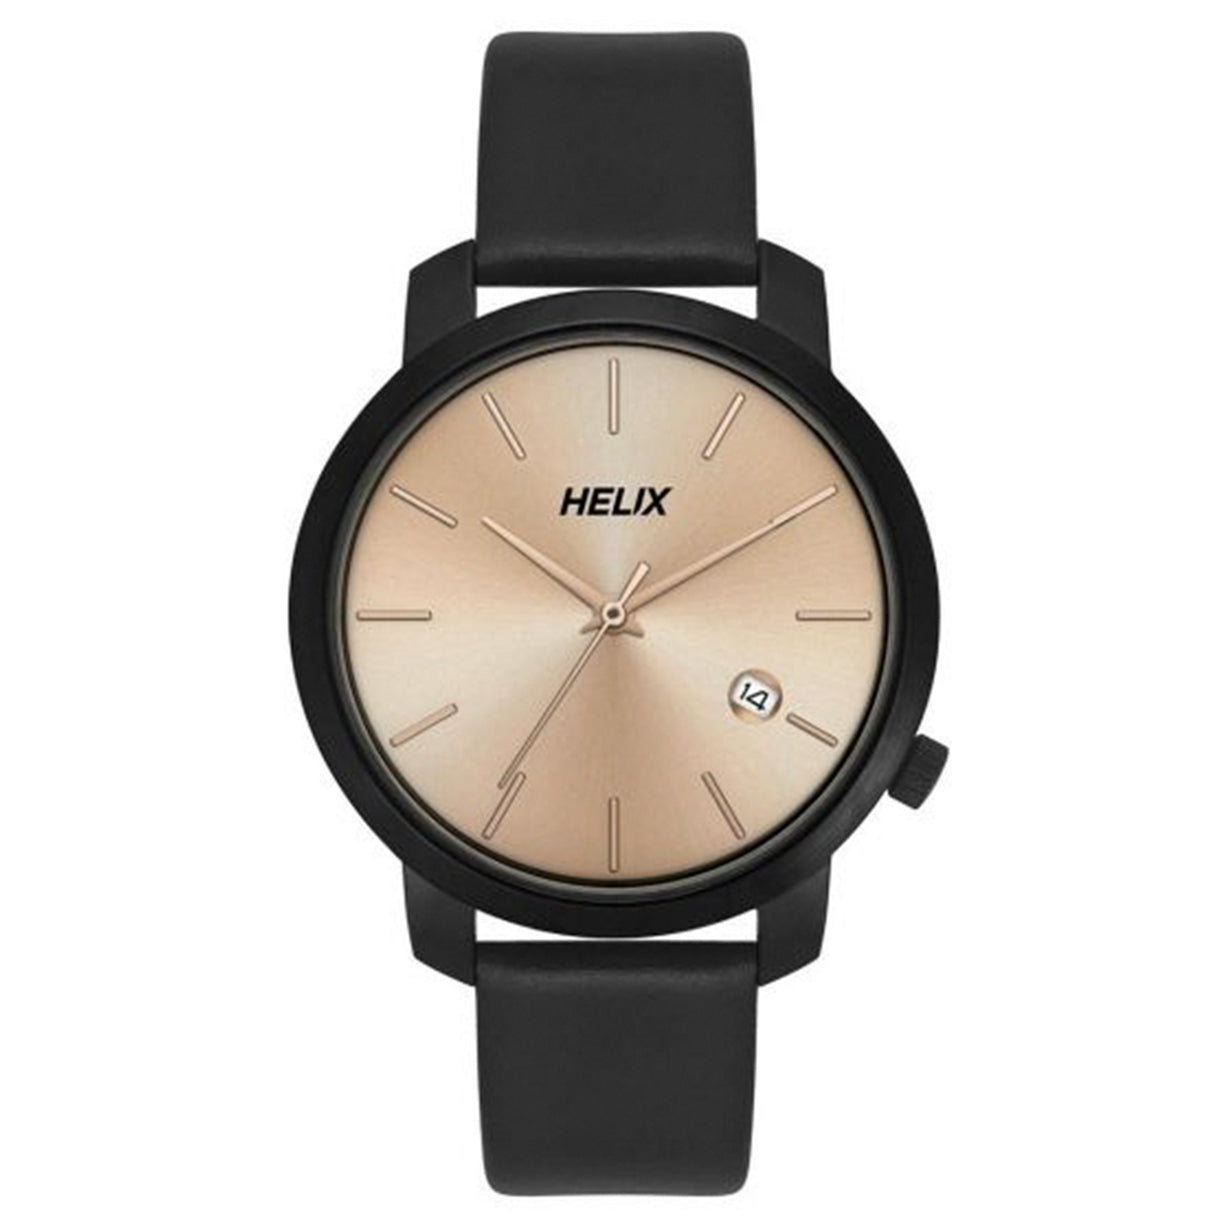 Women's Helix Watches - Buy Helix Watches for Women Online in India